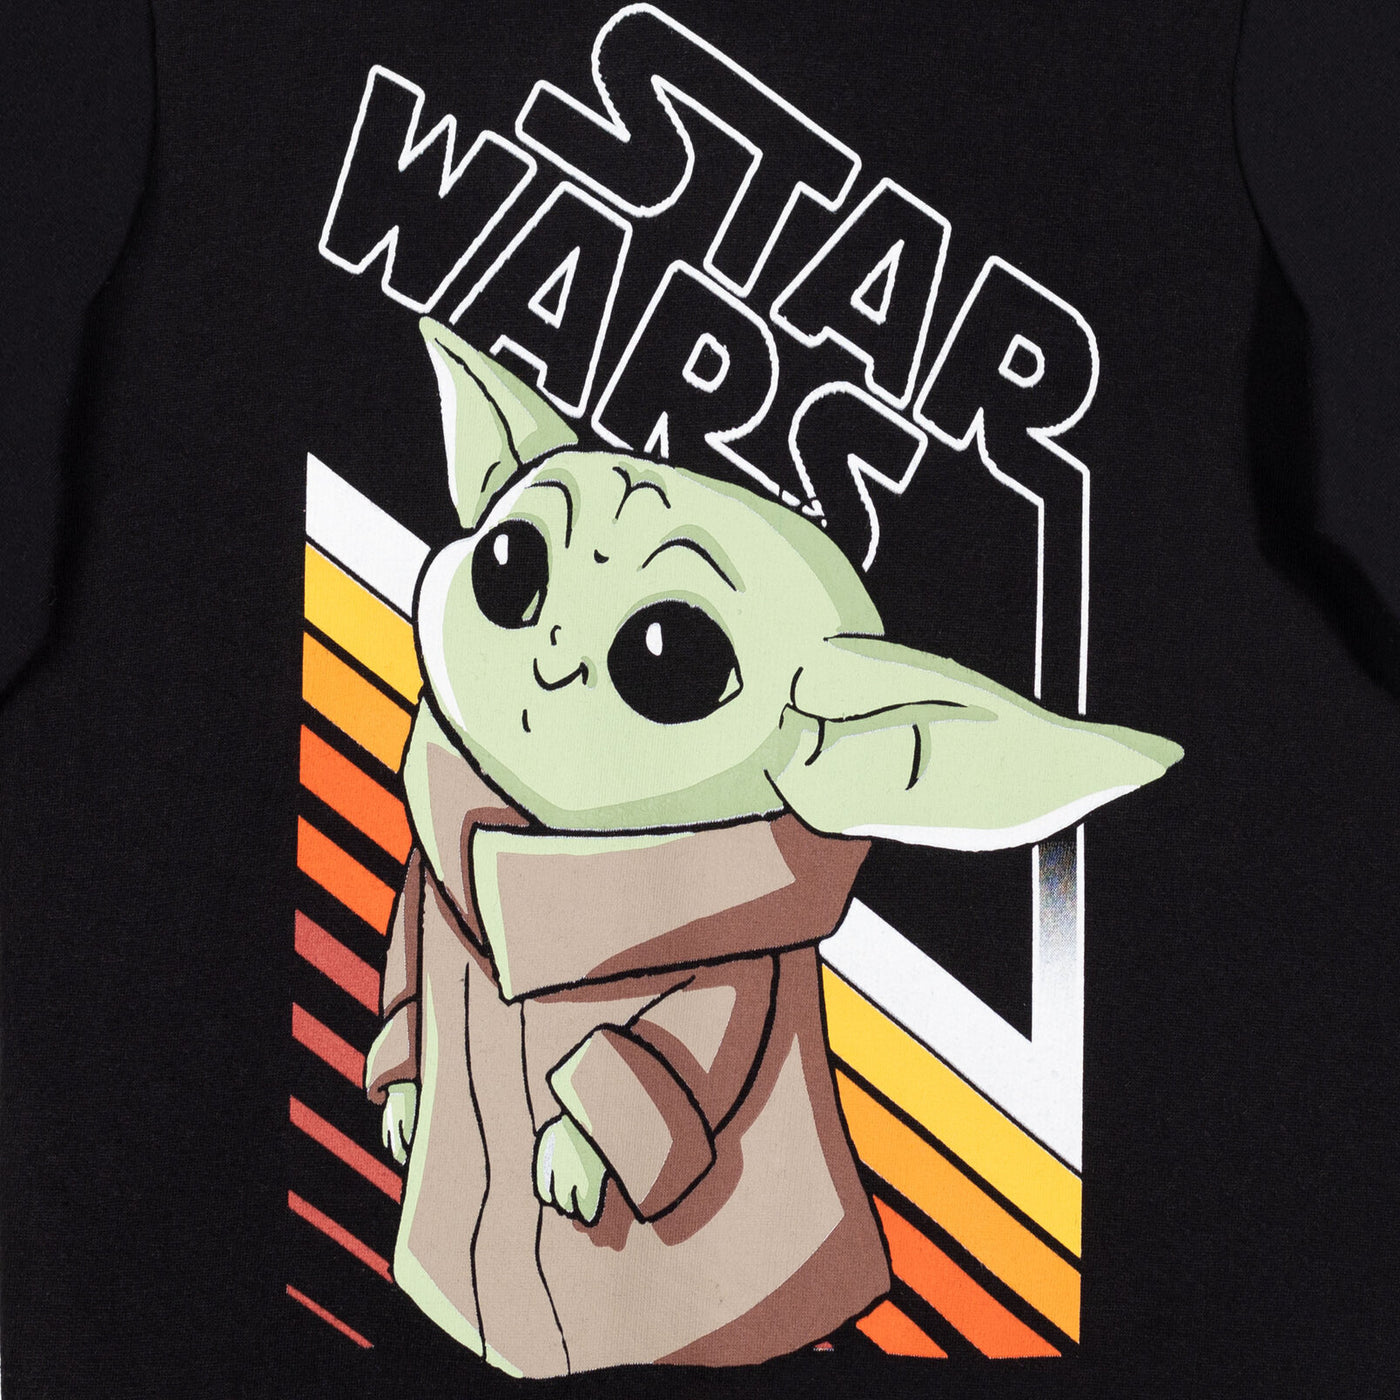 Star Wars Baby Yoda Fleece Pullover Hoodie